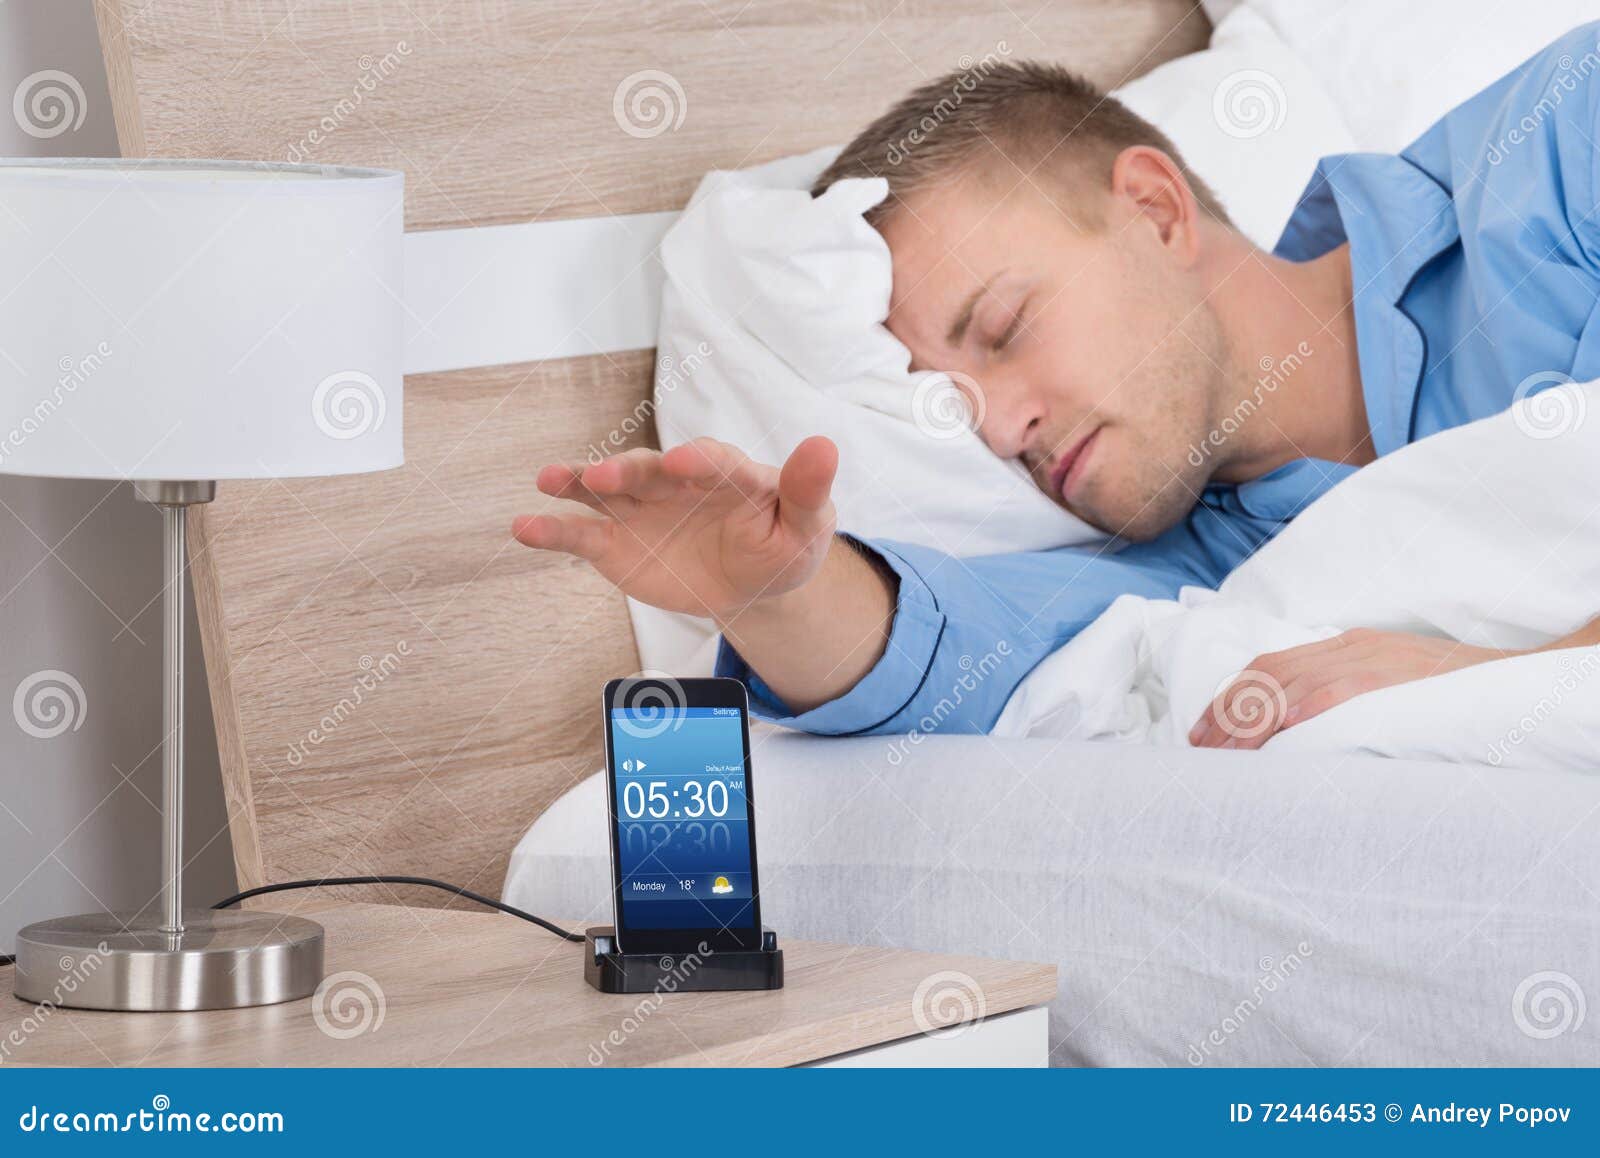 man snoozing alarm on mobile phone screen